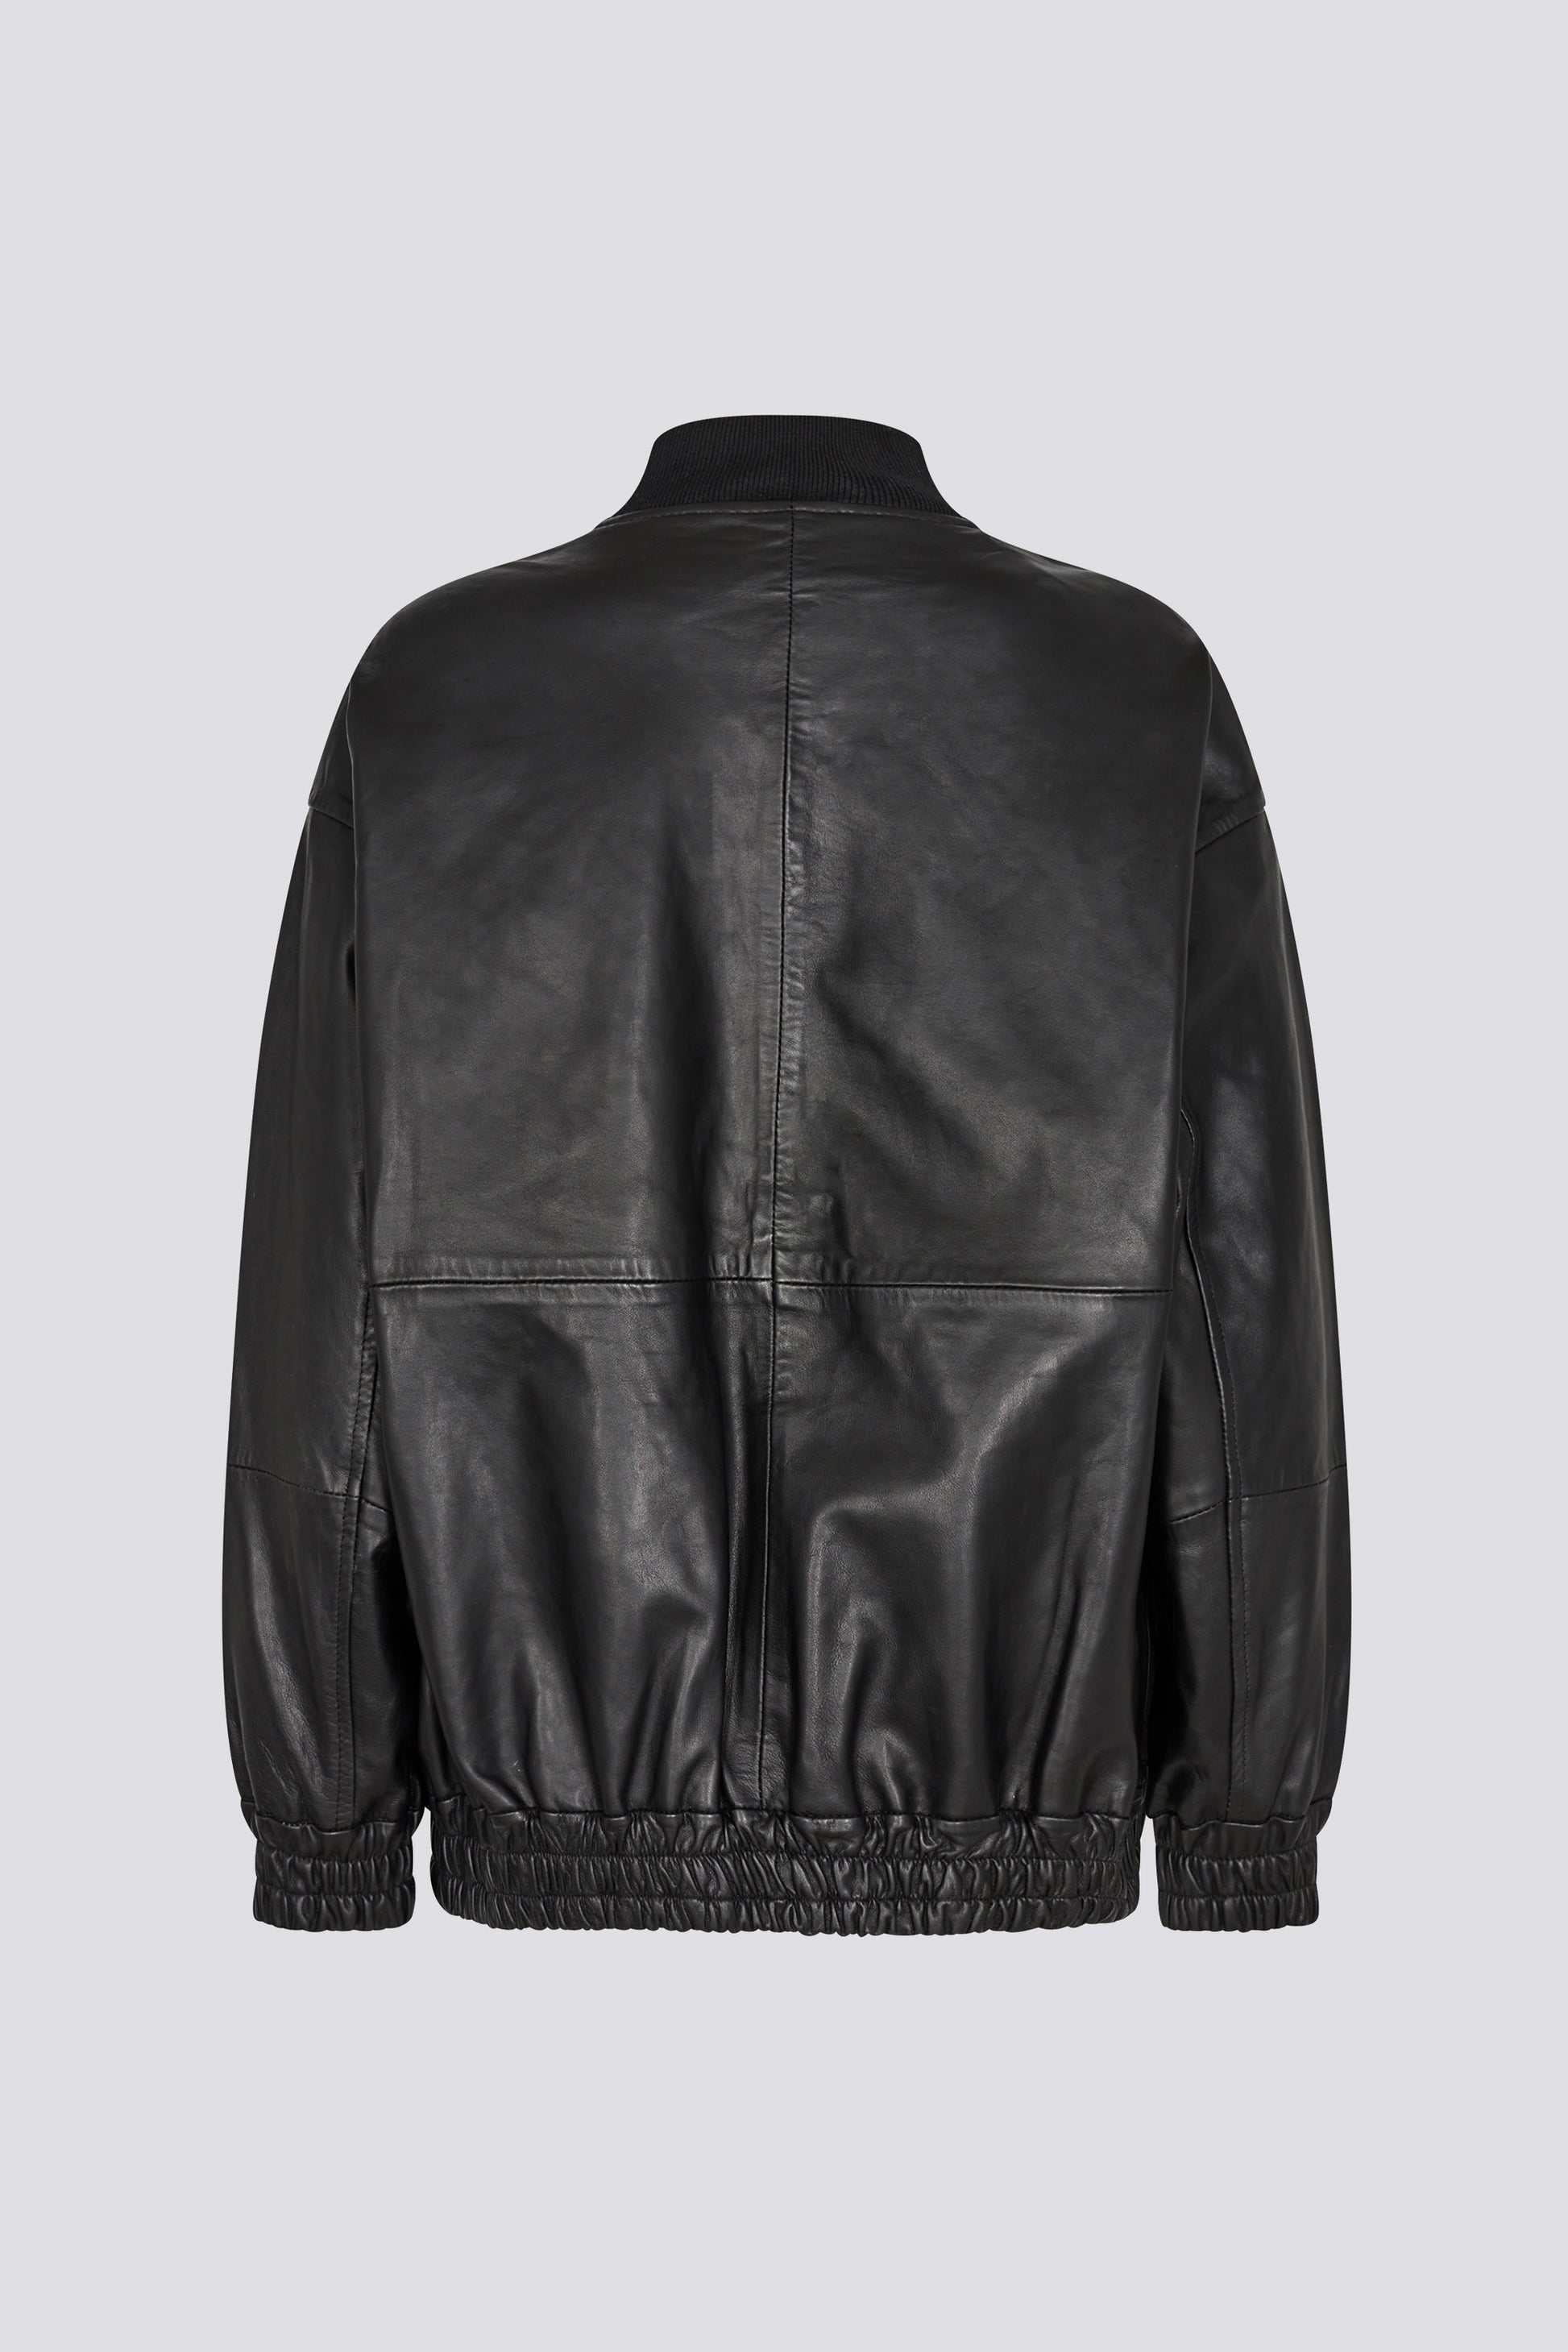 IVY Copenhagen IVY-Kylie Leather Bomber Jacket Leather